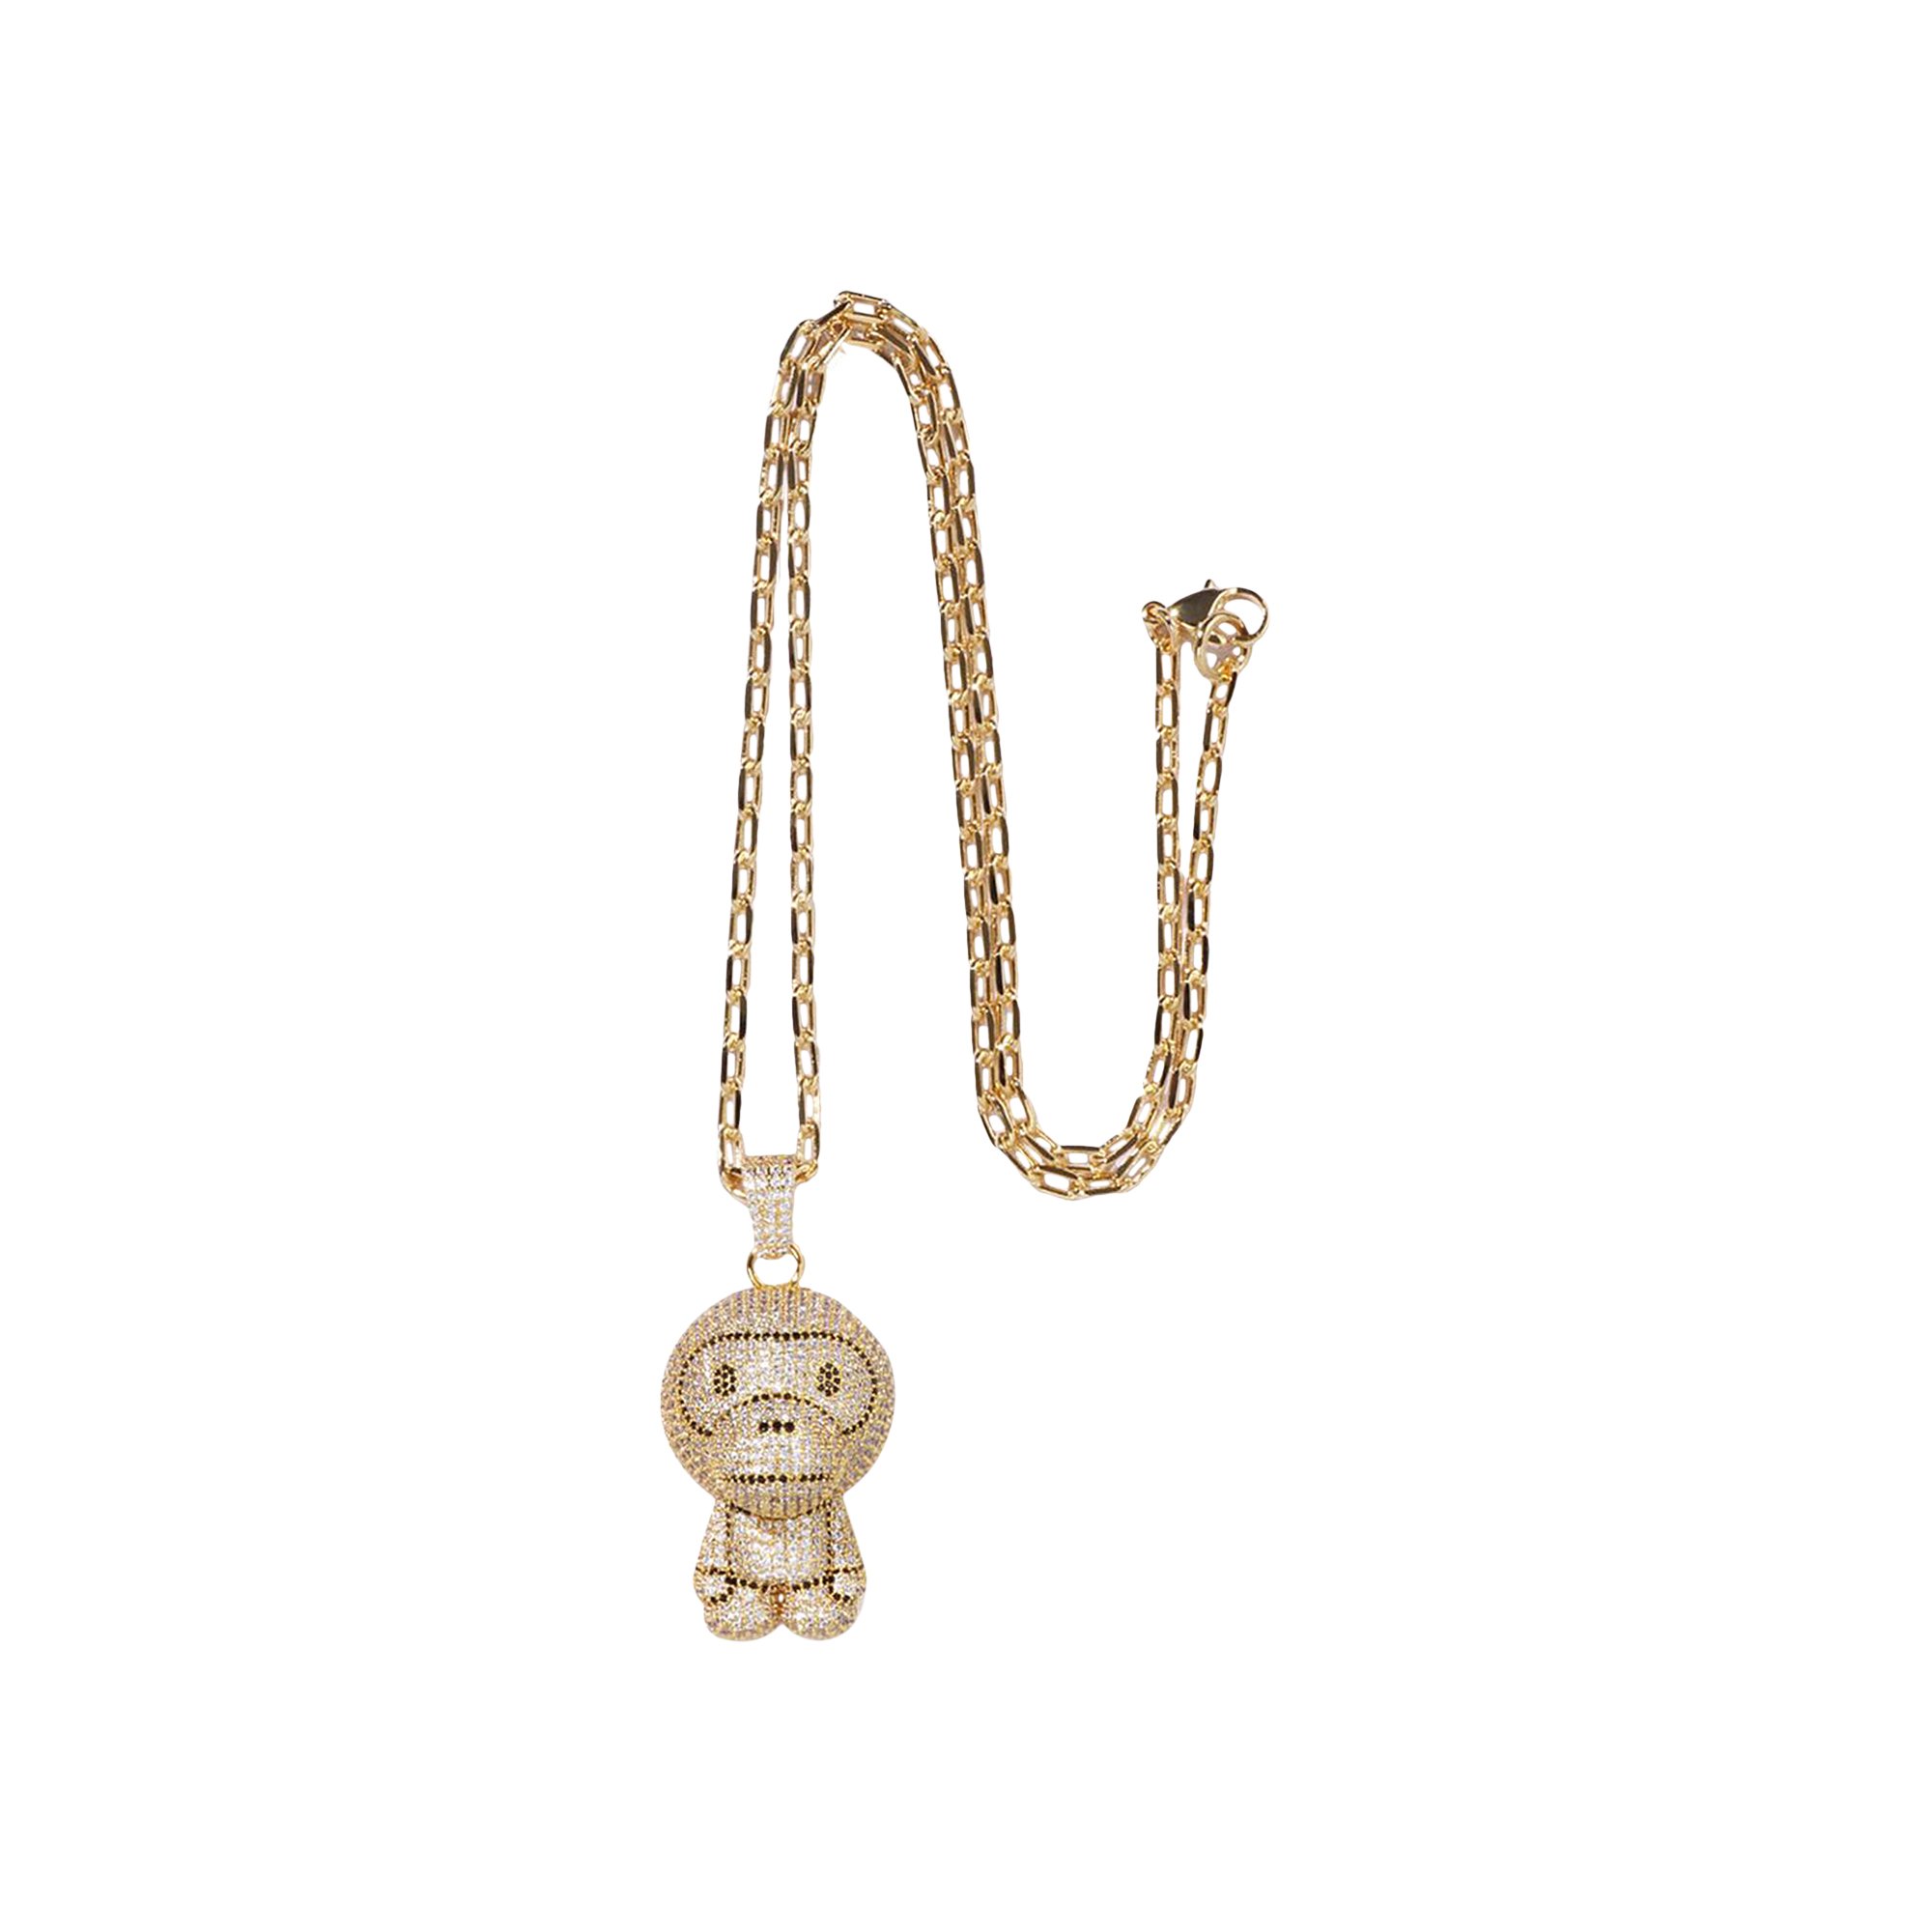 Buy BAPE Milo Crystal Stone Necklace 'Gold' - 2I80 182 002 GOLD